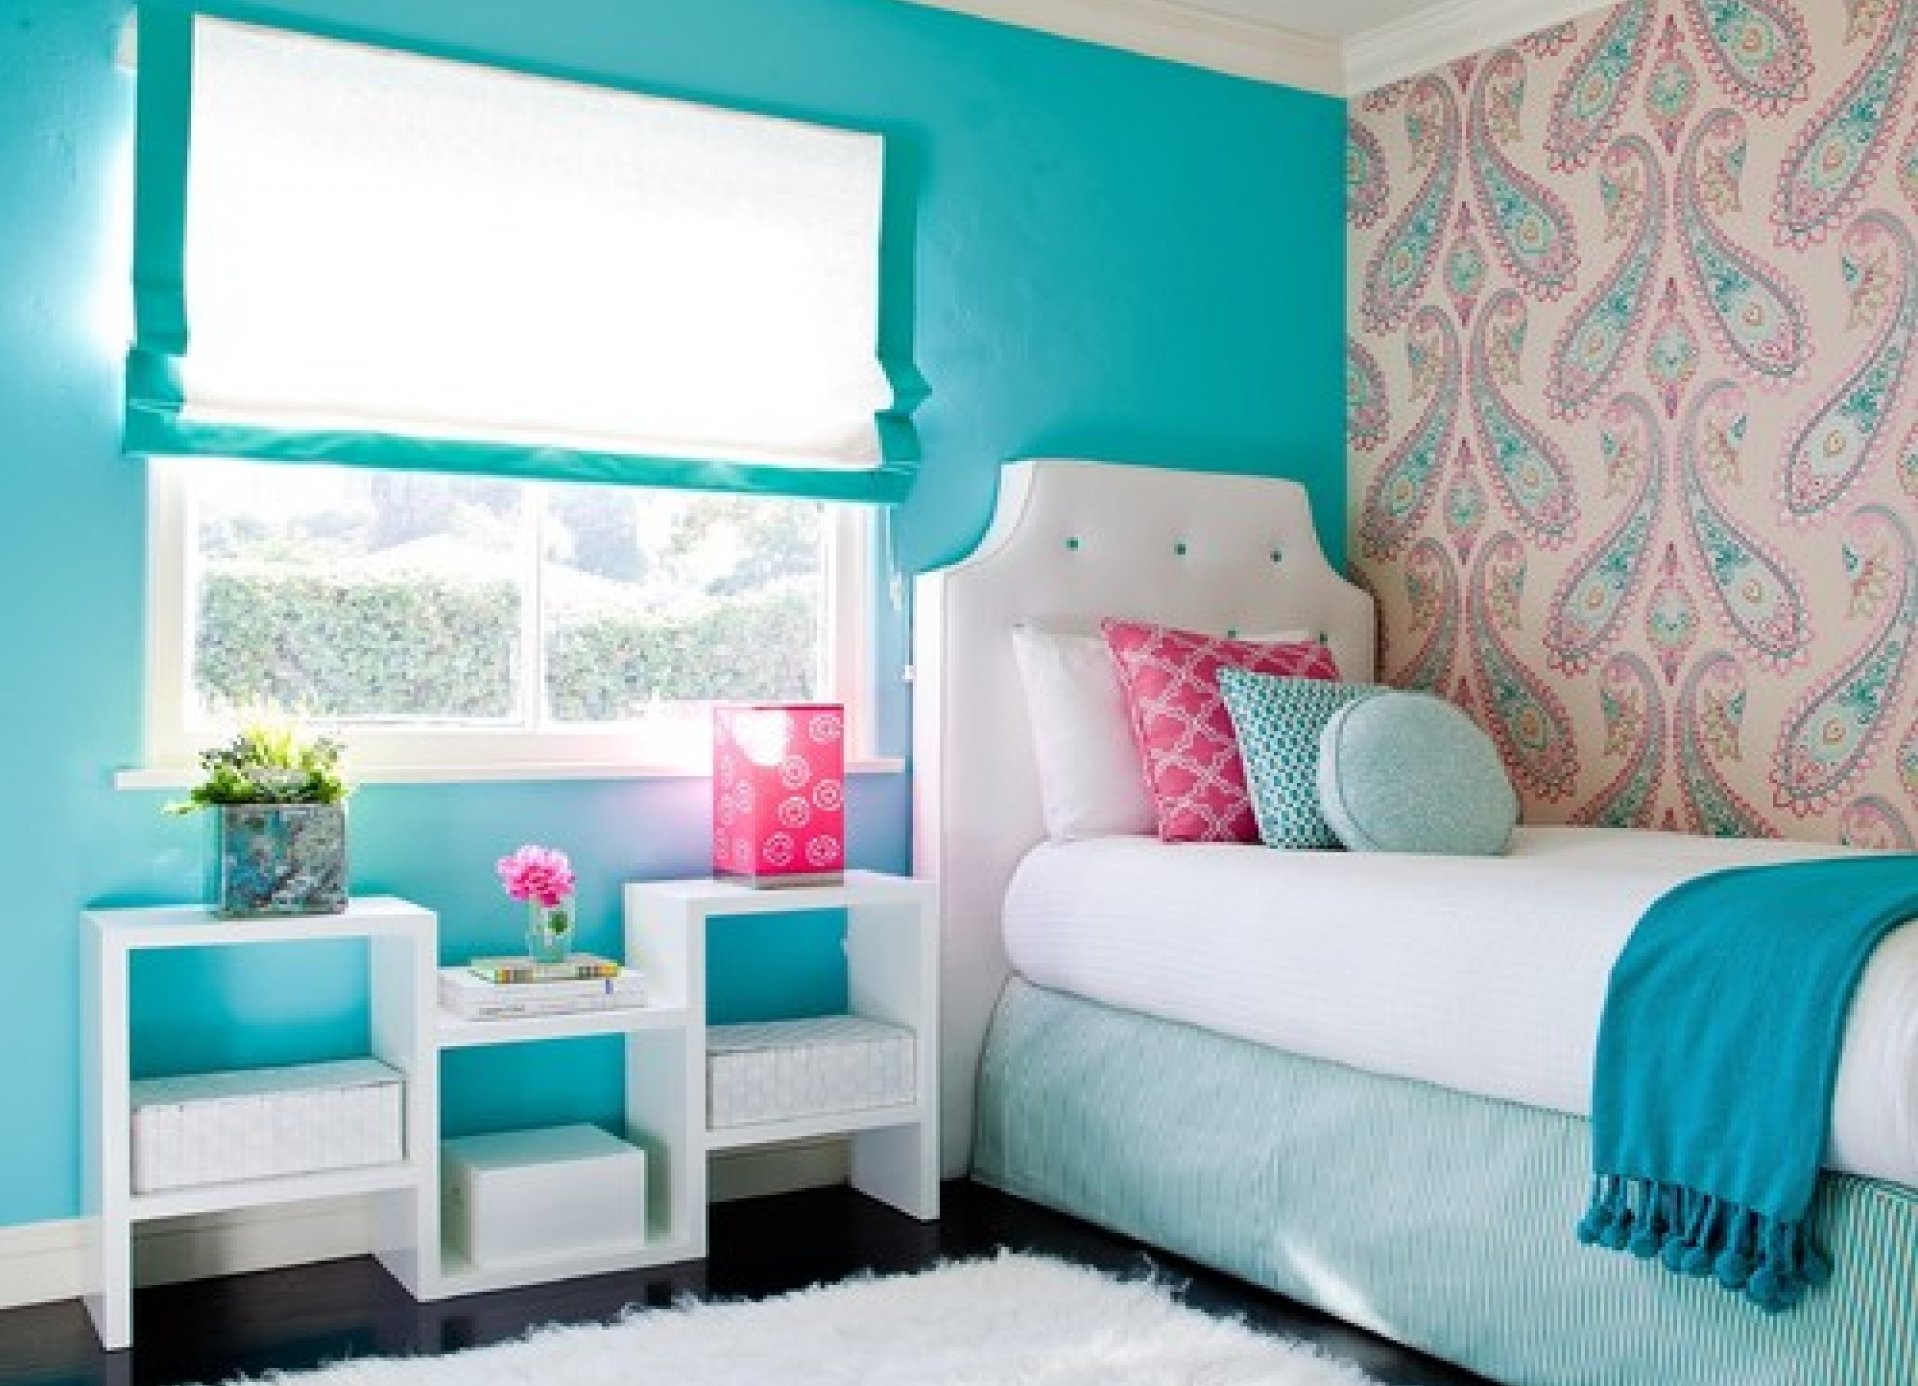 Room tone. Комната в розово голубых тонах. Бирюзовая комната для девочки. Детская комната в бирюзовом цвете. Комната для девочки в голубых тонах.